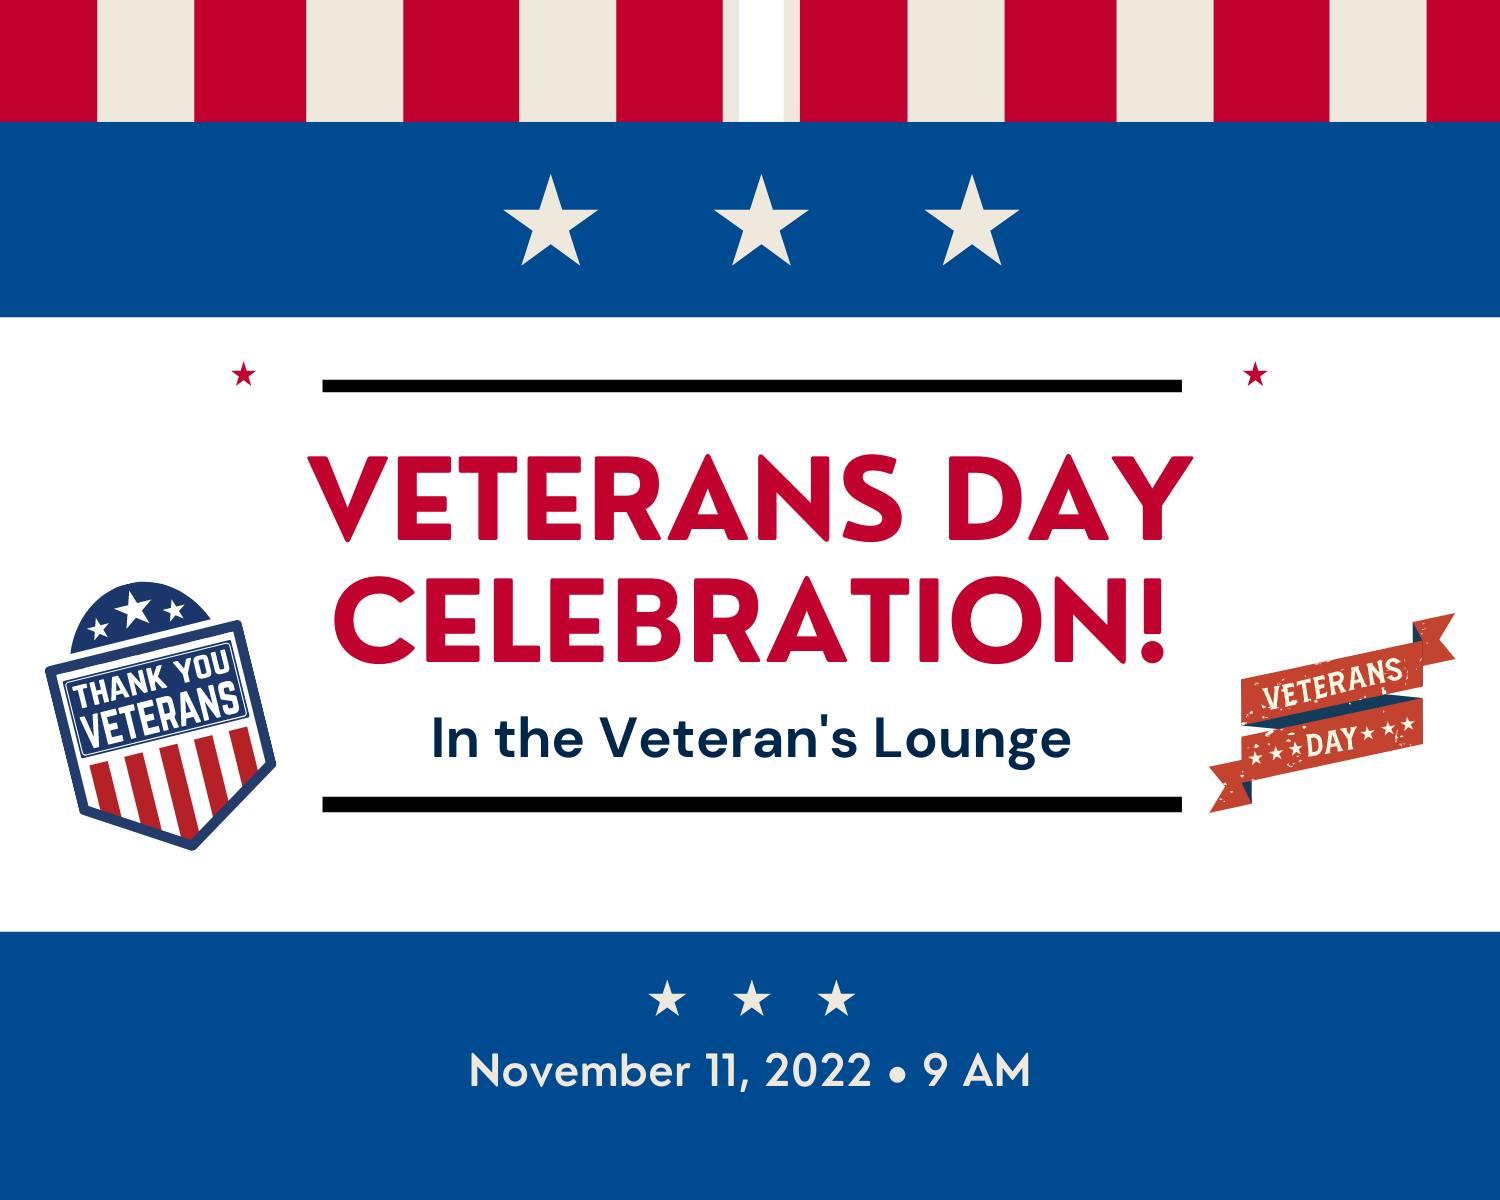 Veteran's Day Appreciation Breakfast!
Tue Oct 11, 9:00 AM - Tue Oct 11, 12:00 PM